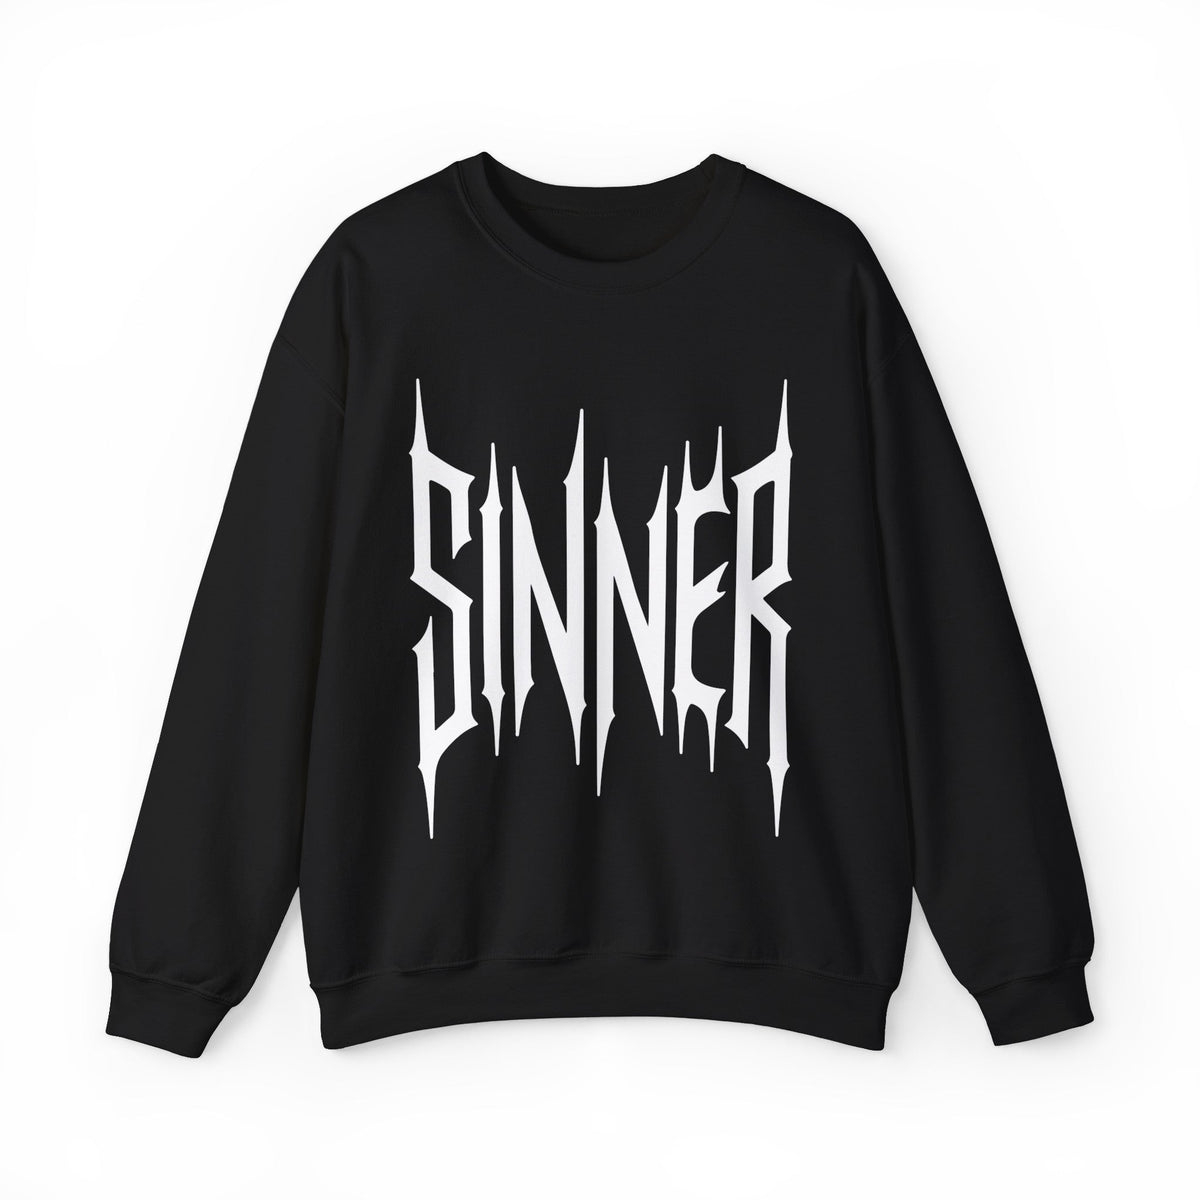 Sinner Unisex Sweatshirt - Goth Cloth Co.Sweatshirt37942822272876078115